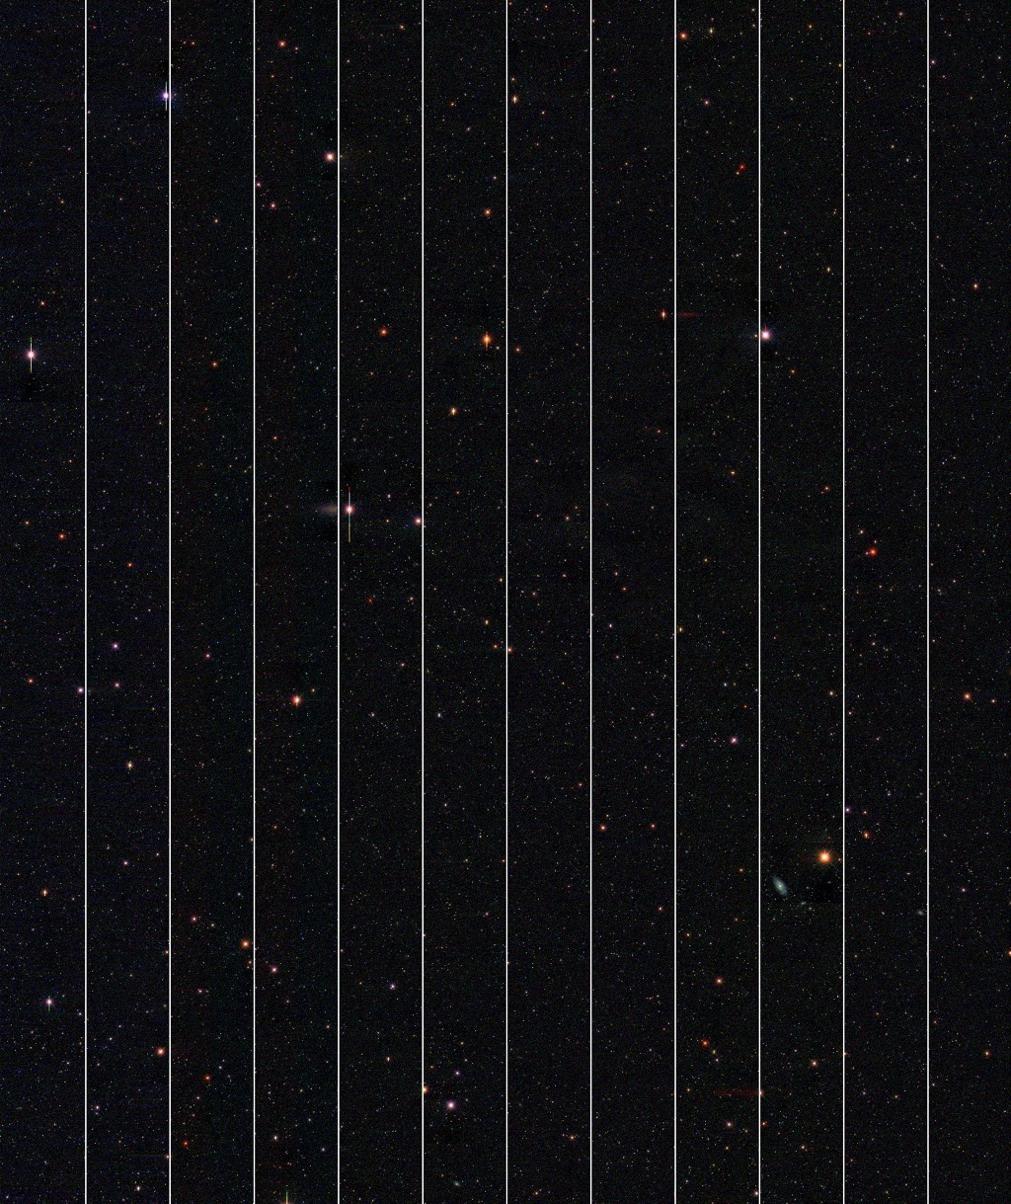 SDSS sky